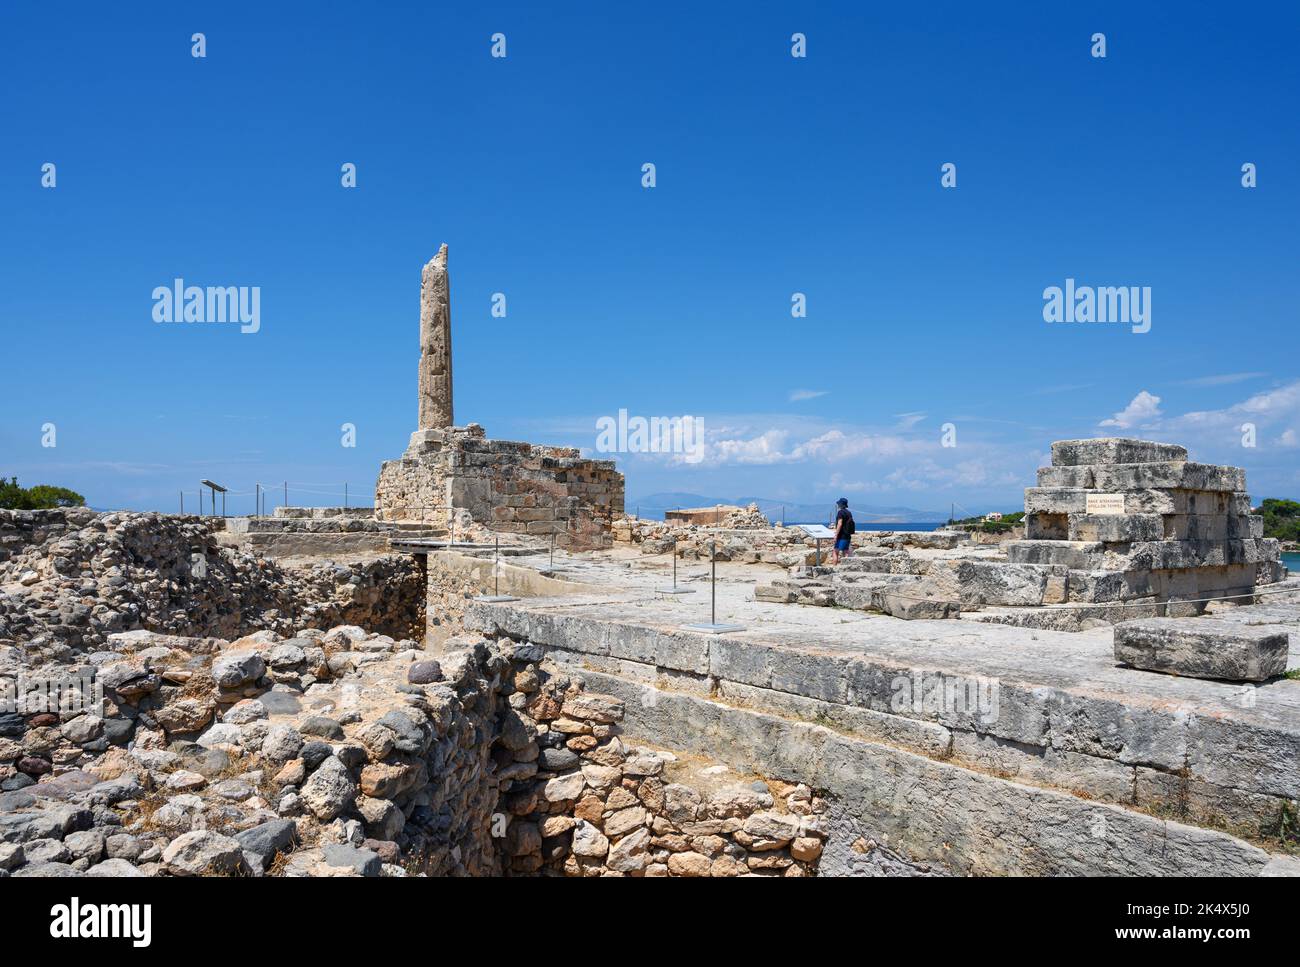 Ruines du Temple d'Apollon, ville d'Aegina, Aegina, Iles Saroniques, Grèce Banque D'Images